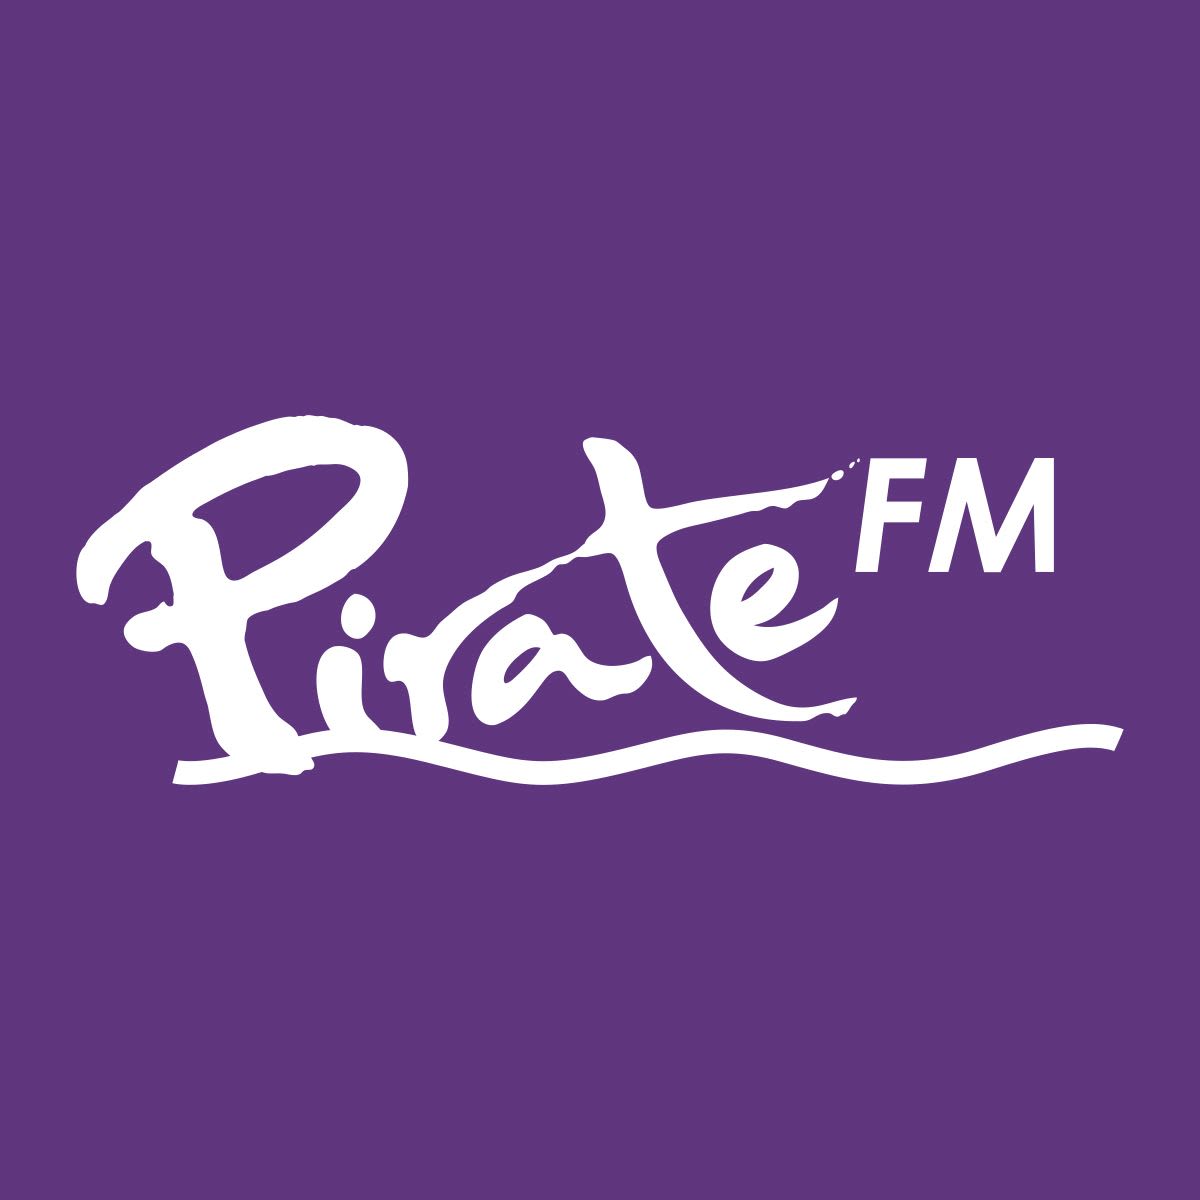 TEF 6686 receiving London FM pirate Vibes FM 